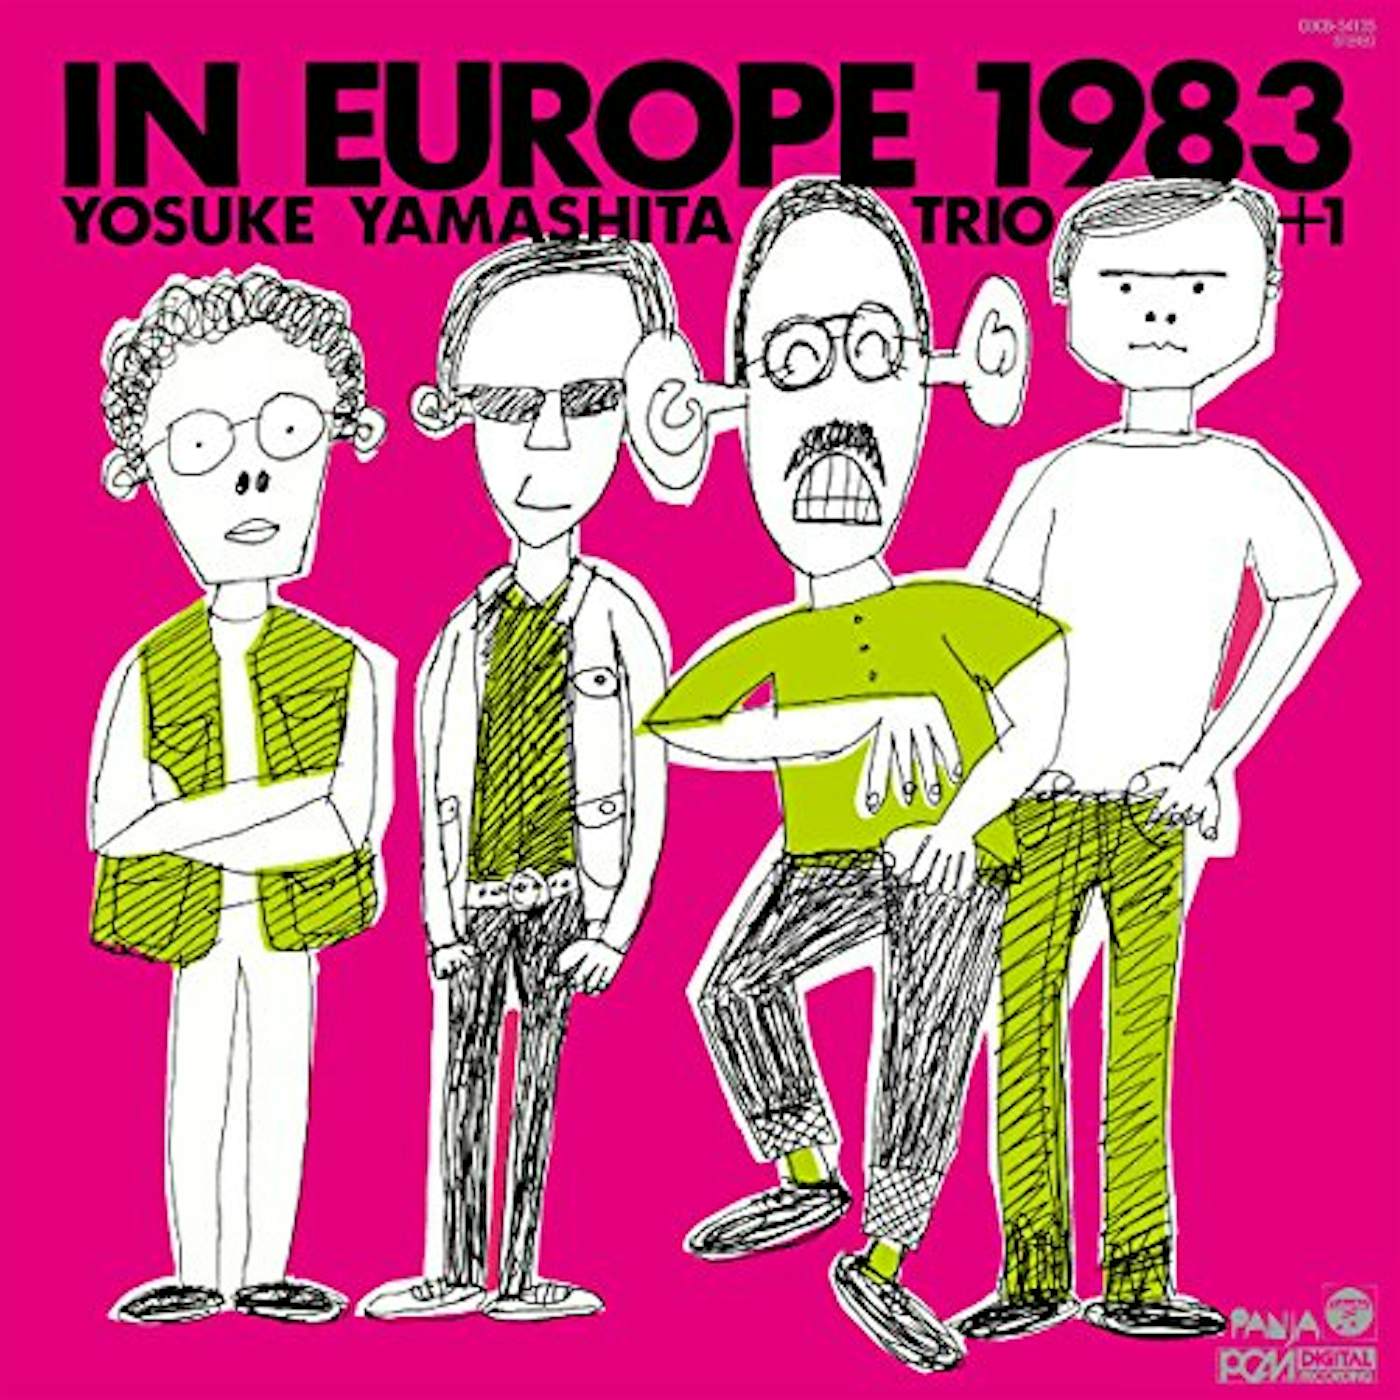 Yosuke Yamashita IN EUROPE 1983: COMPLETE EDITION CD